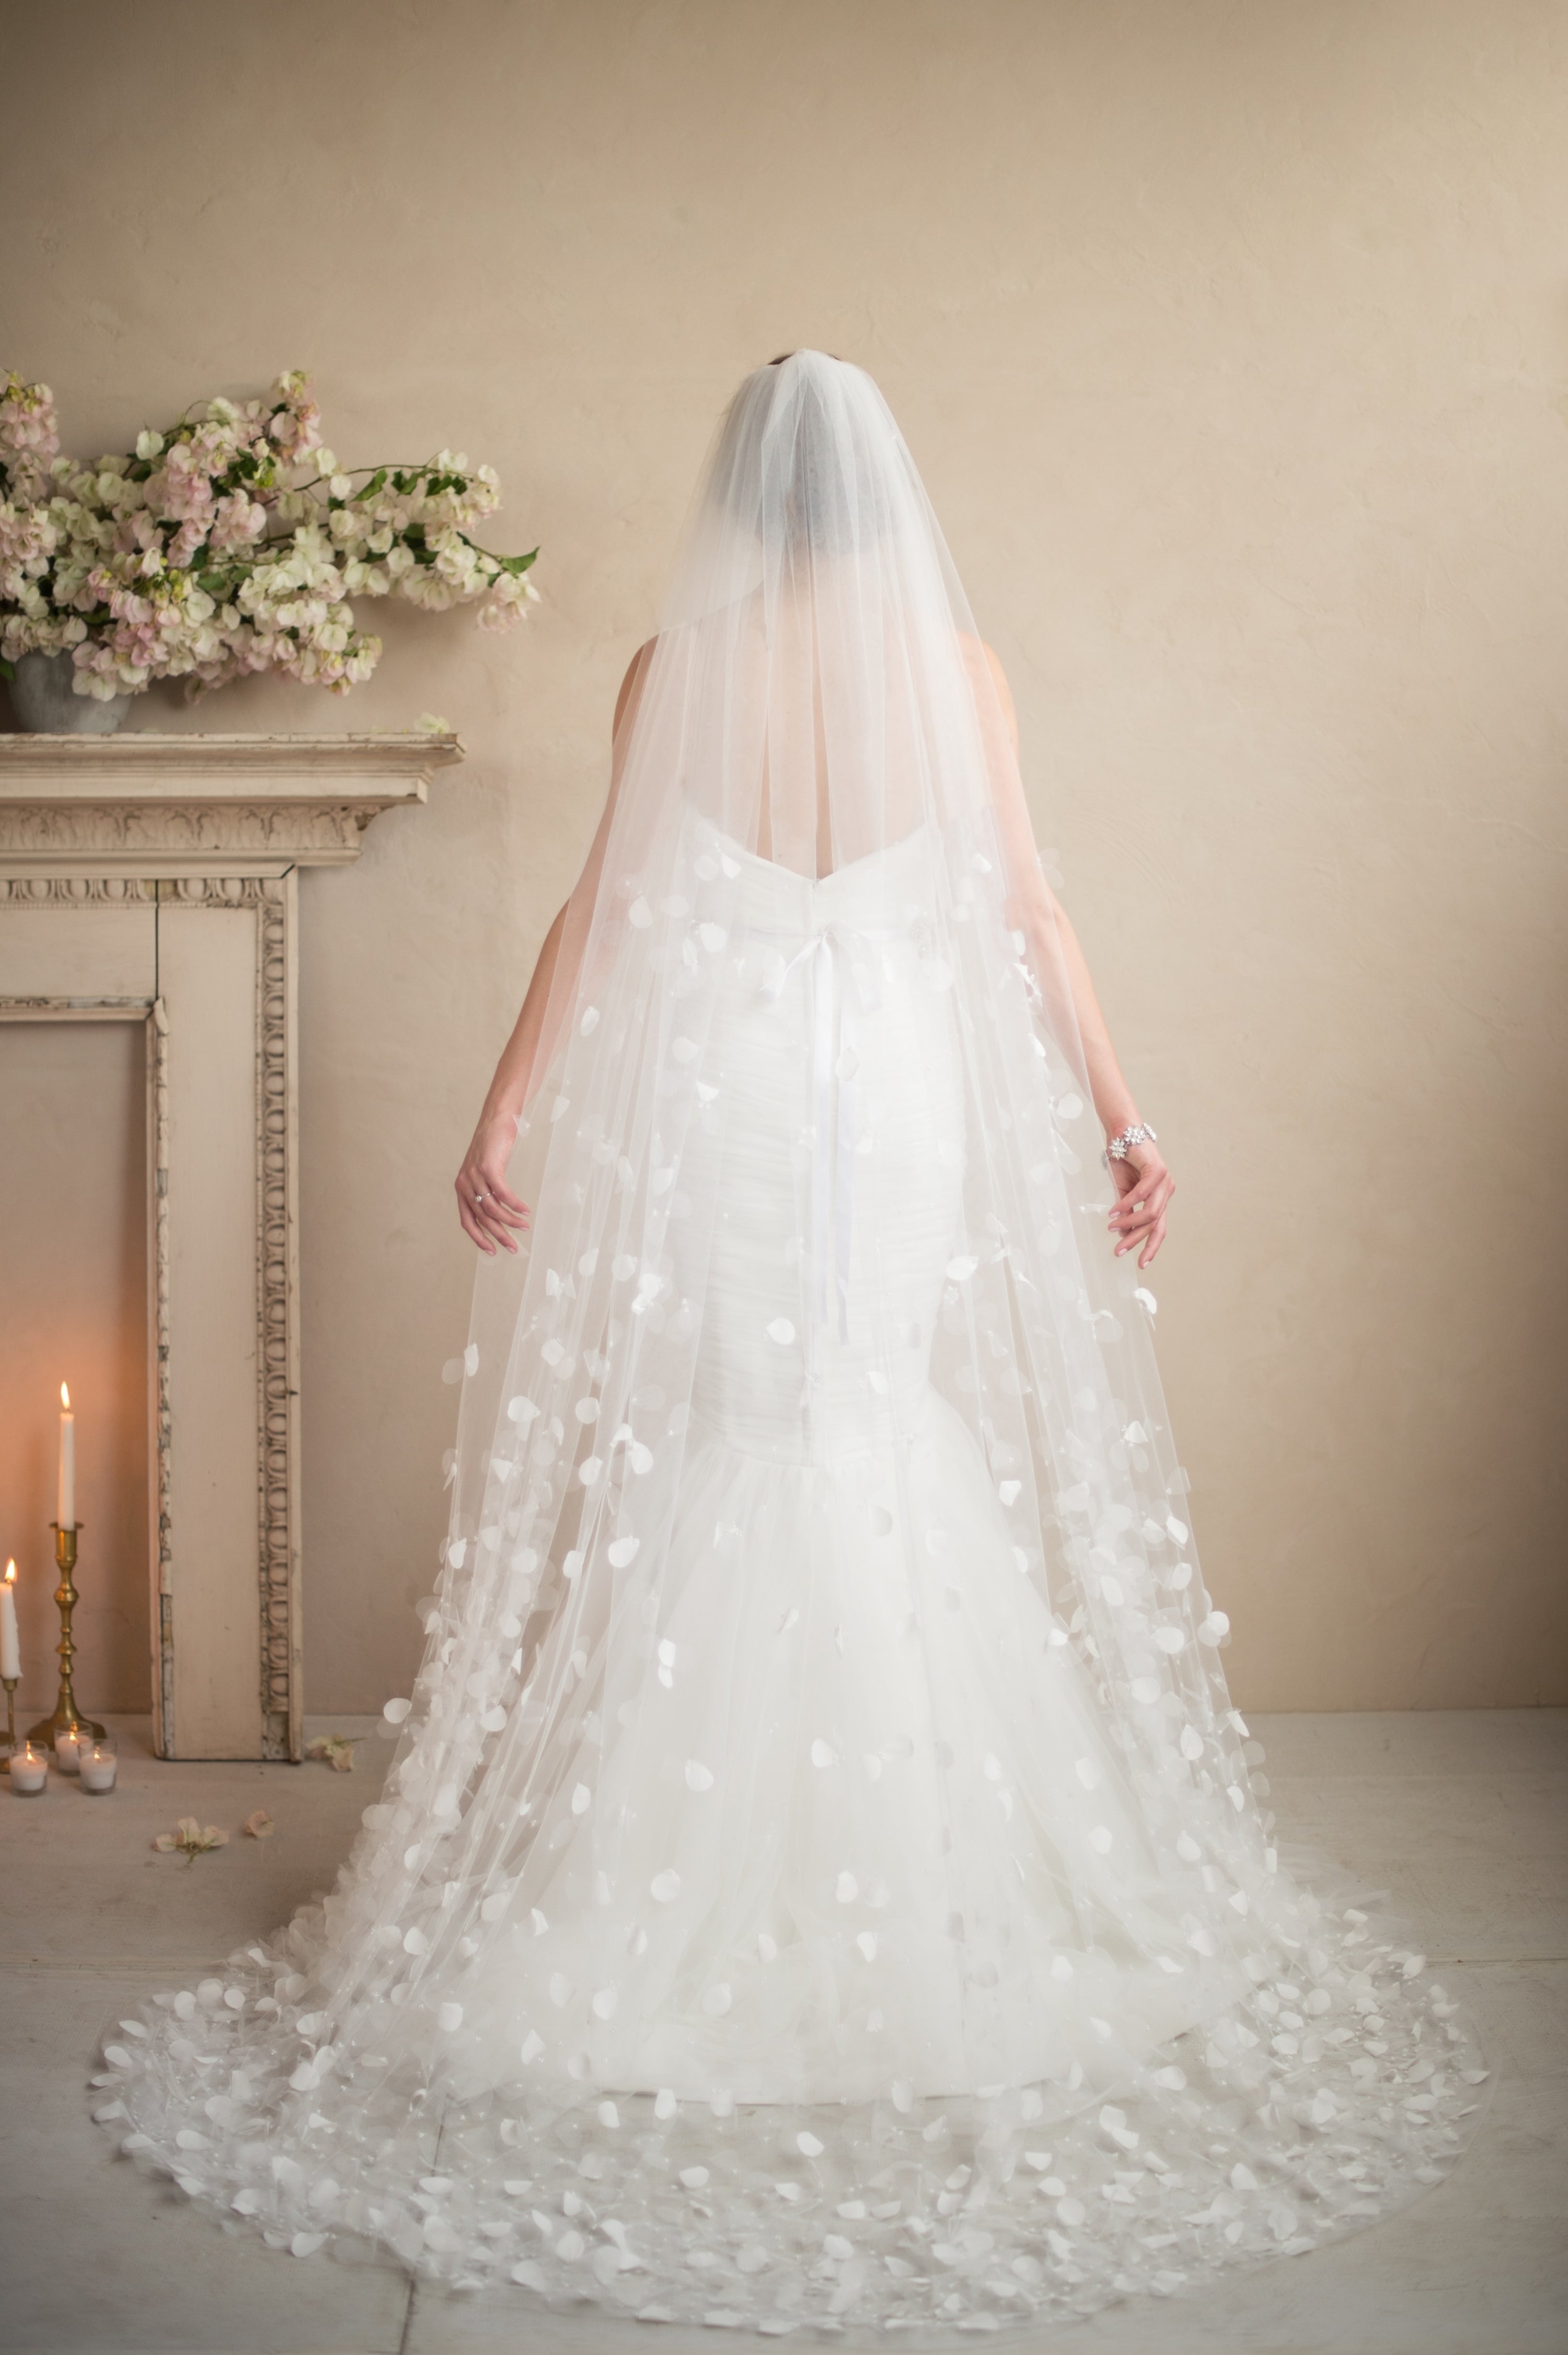 Olbye Women's Wedding Veil 108 Inch Cathedral Veil Single Tier 1T